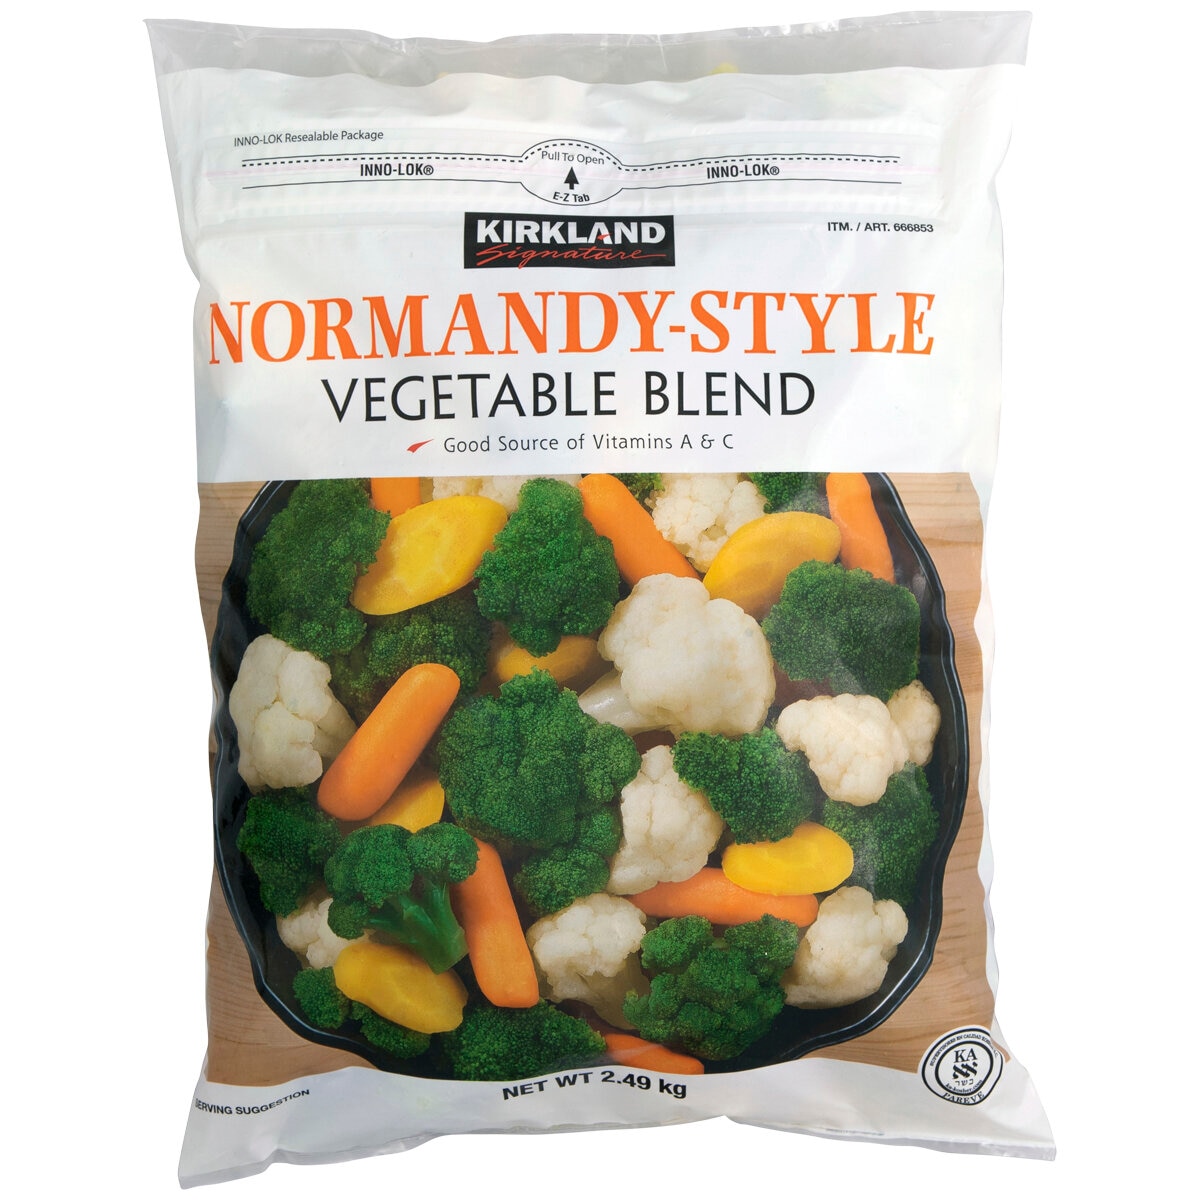 Kirkland Signature Normandy-Style Vegetables 2.49kg